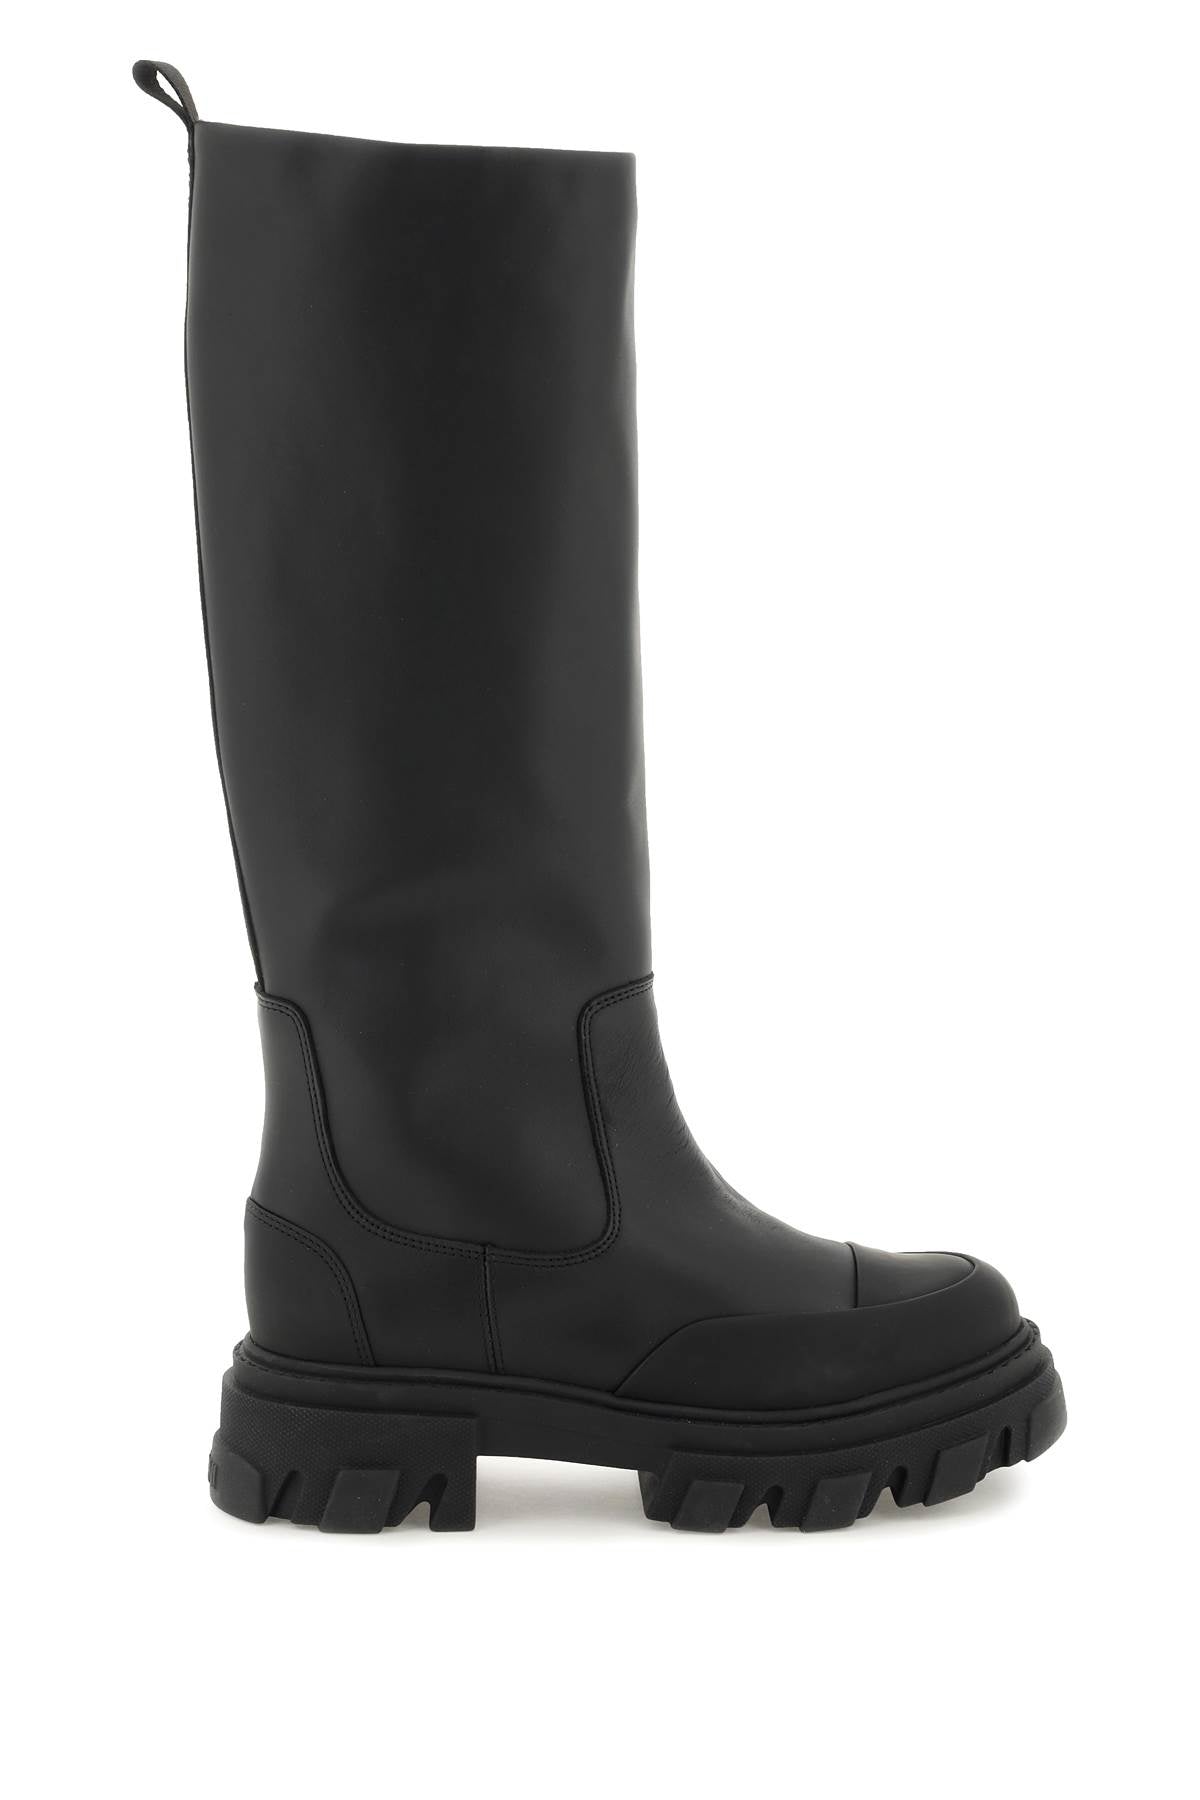 tubular leather boots-0